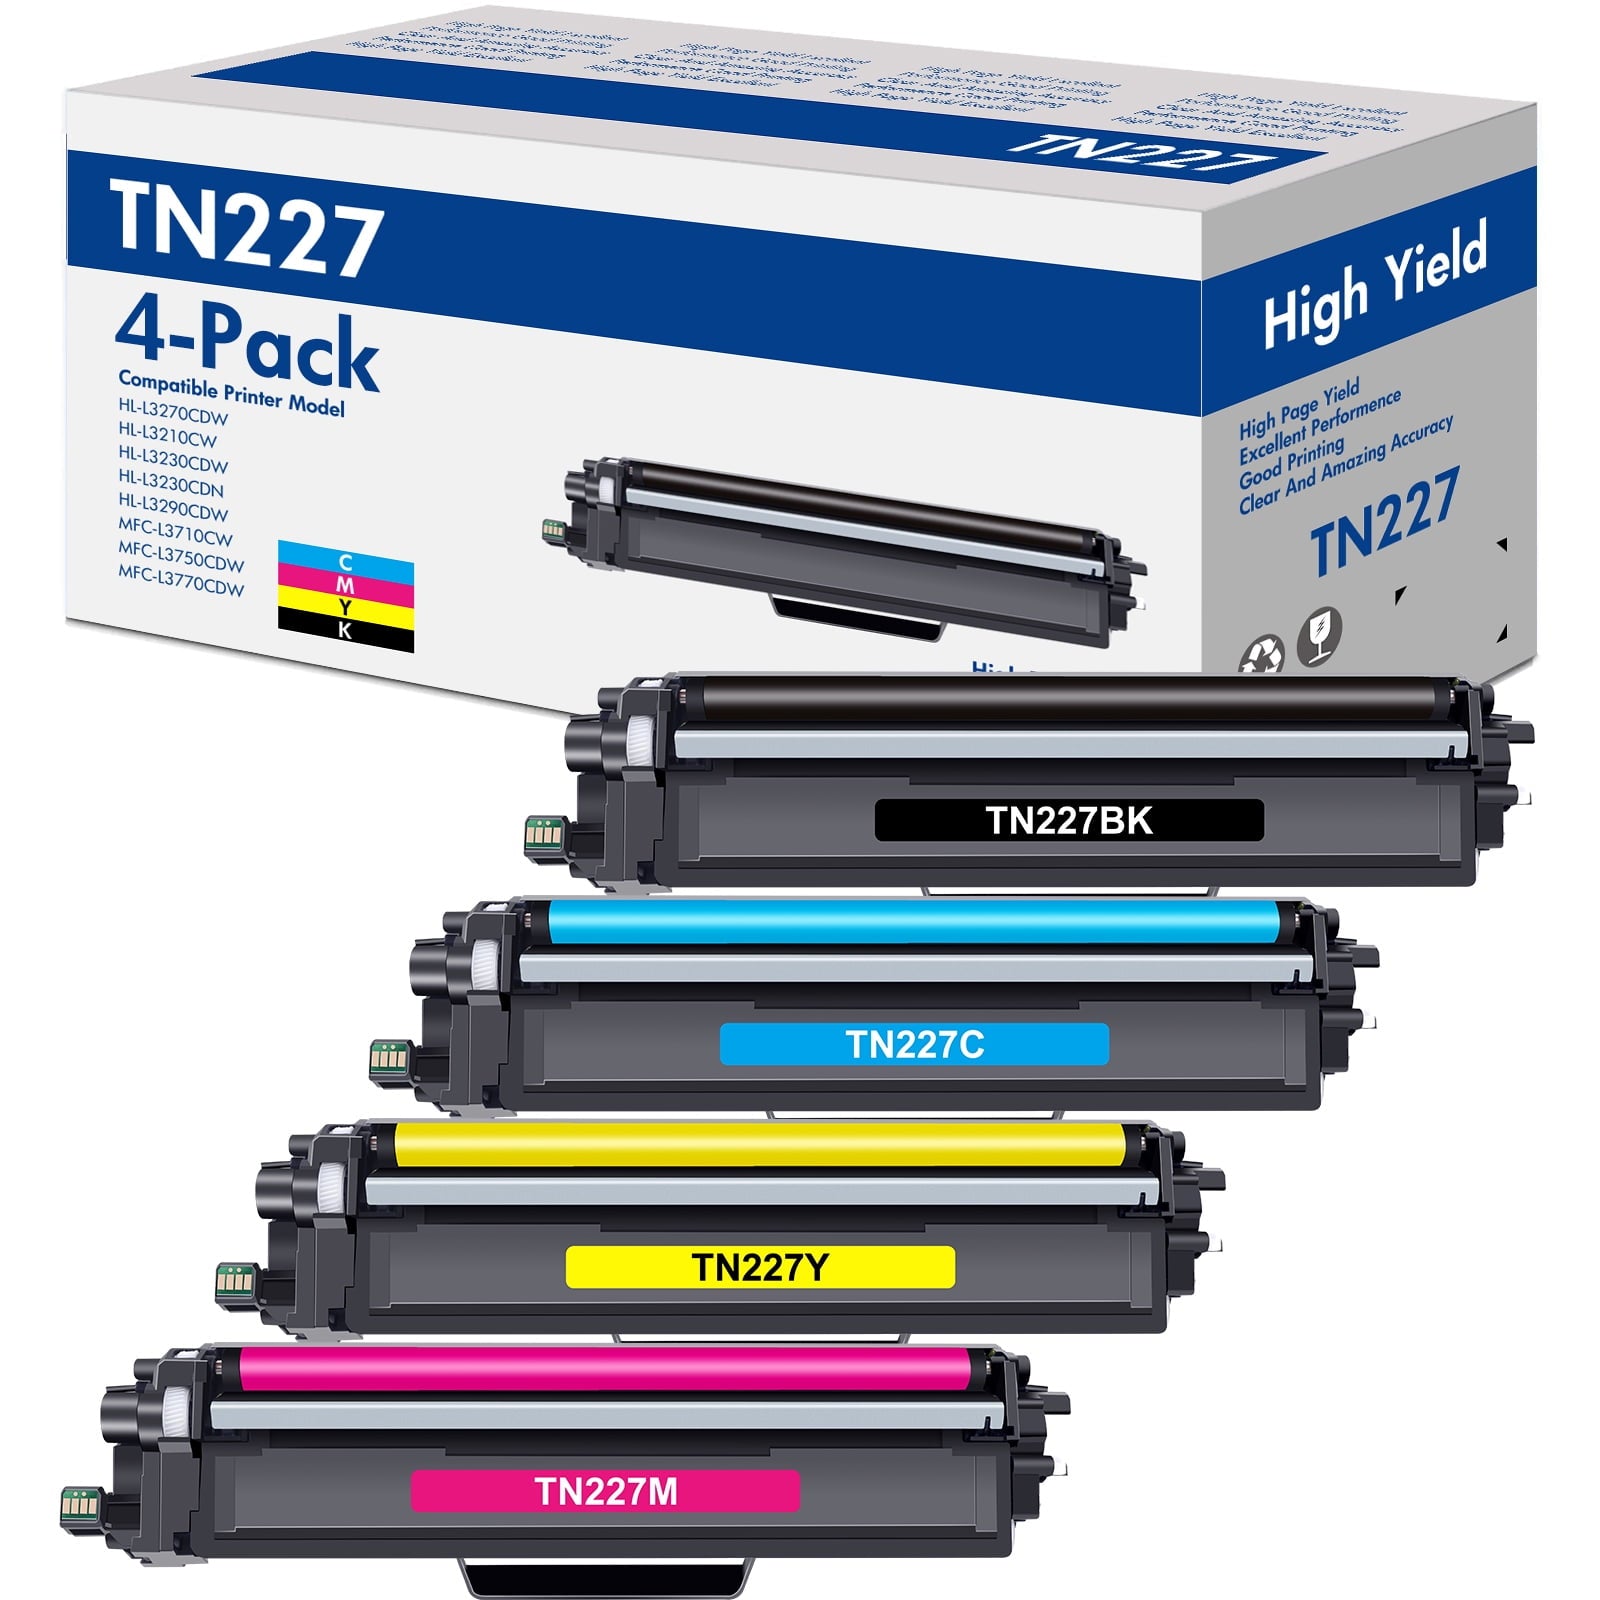 TN227 High Yield Toner Cartridge 4-Pack Compatible for Brother TN227 TN-227 TN-227BK/C/M/Y for HL-L3270CDW HL-L3210CW HL-L3230CDW HL-L3290CDW MFC-L3710CW MFC-L3750CDW MFC-L3770CDW Printer